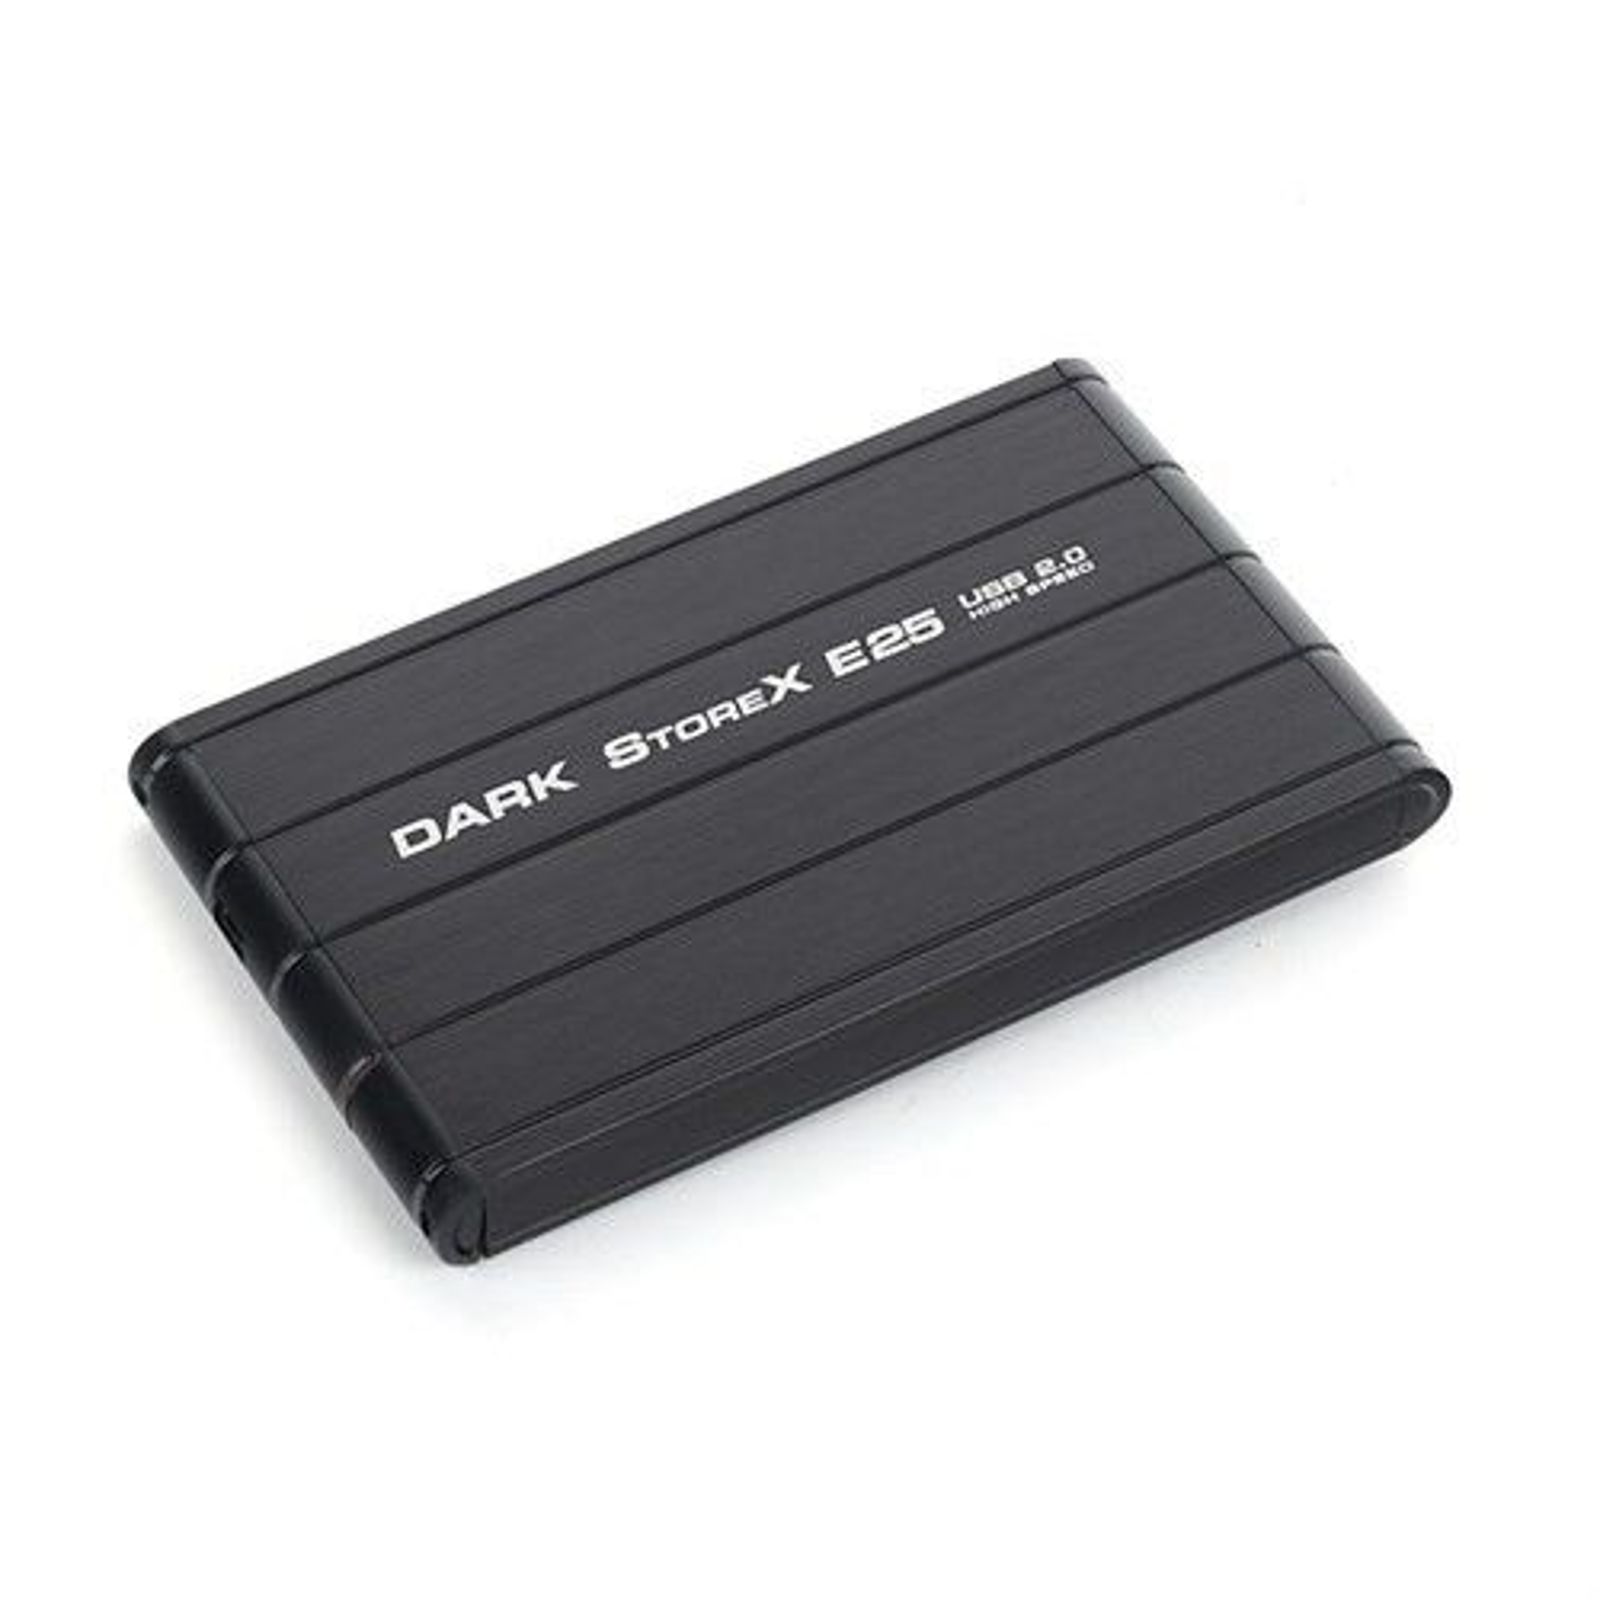 DARK DK-AC-DSE25 2.5" USB 2.0 SATA HDD KUTU ALUMİNYUM